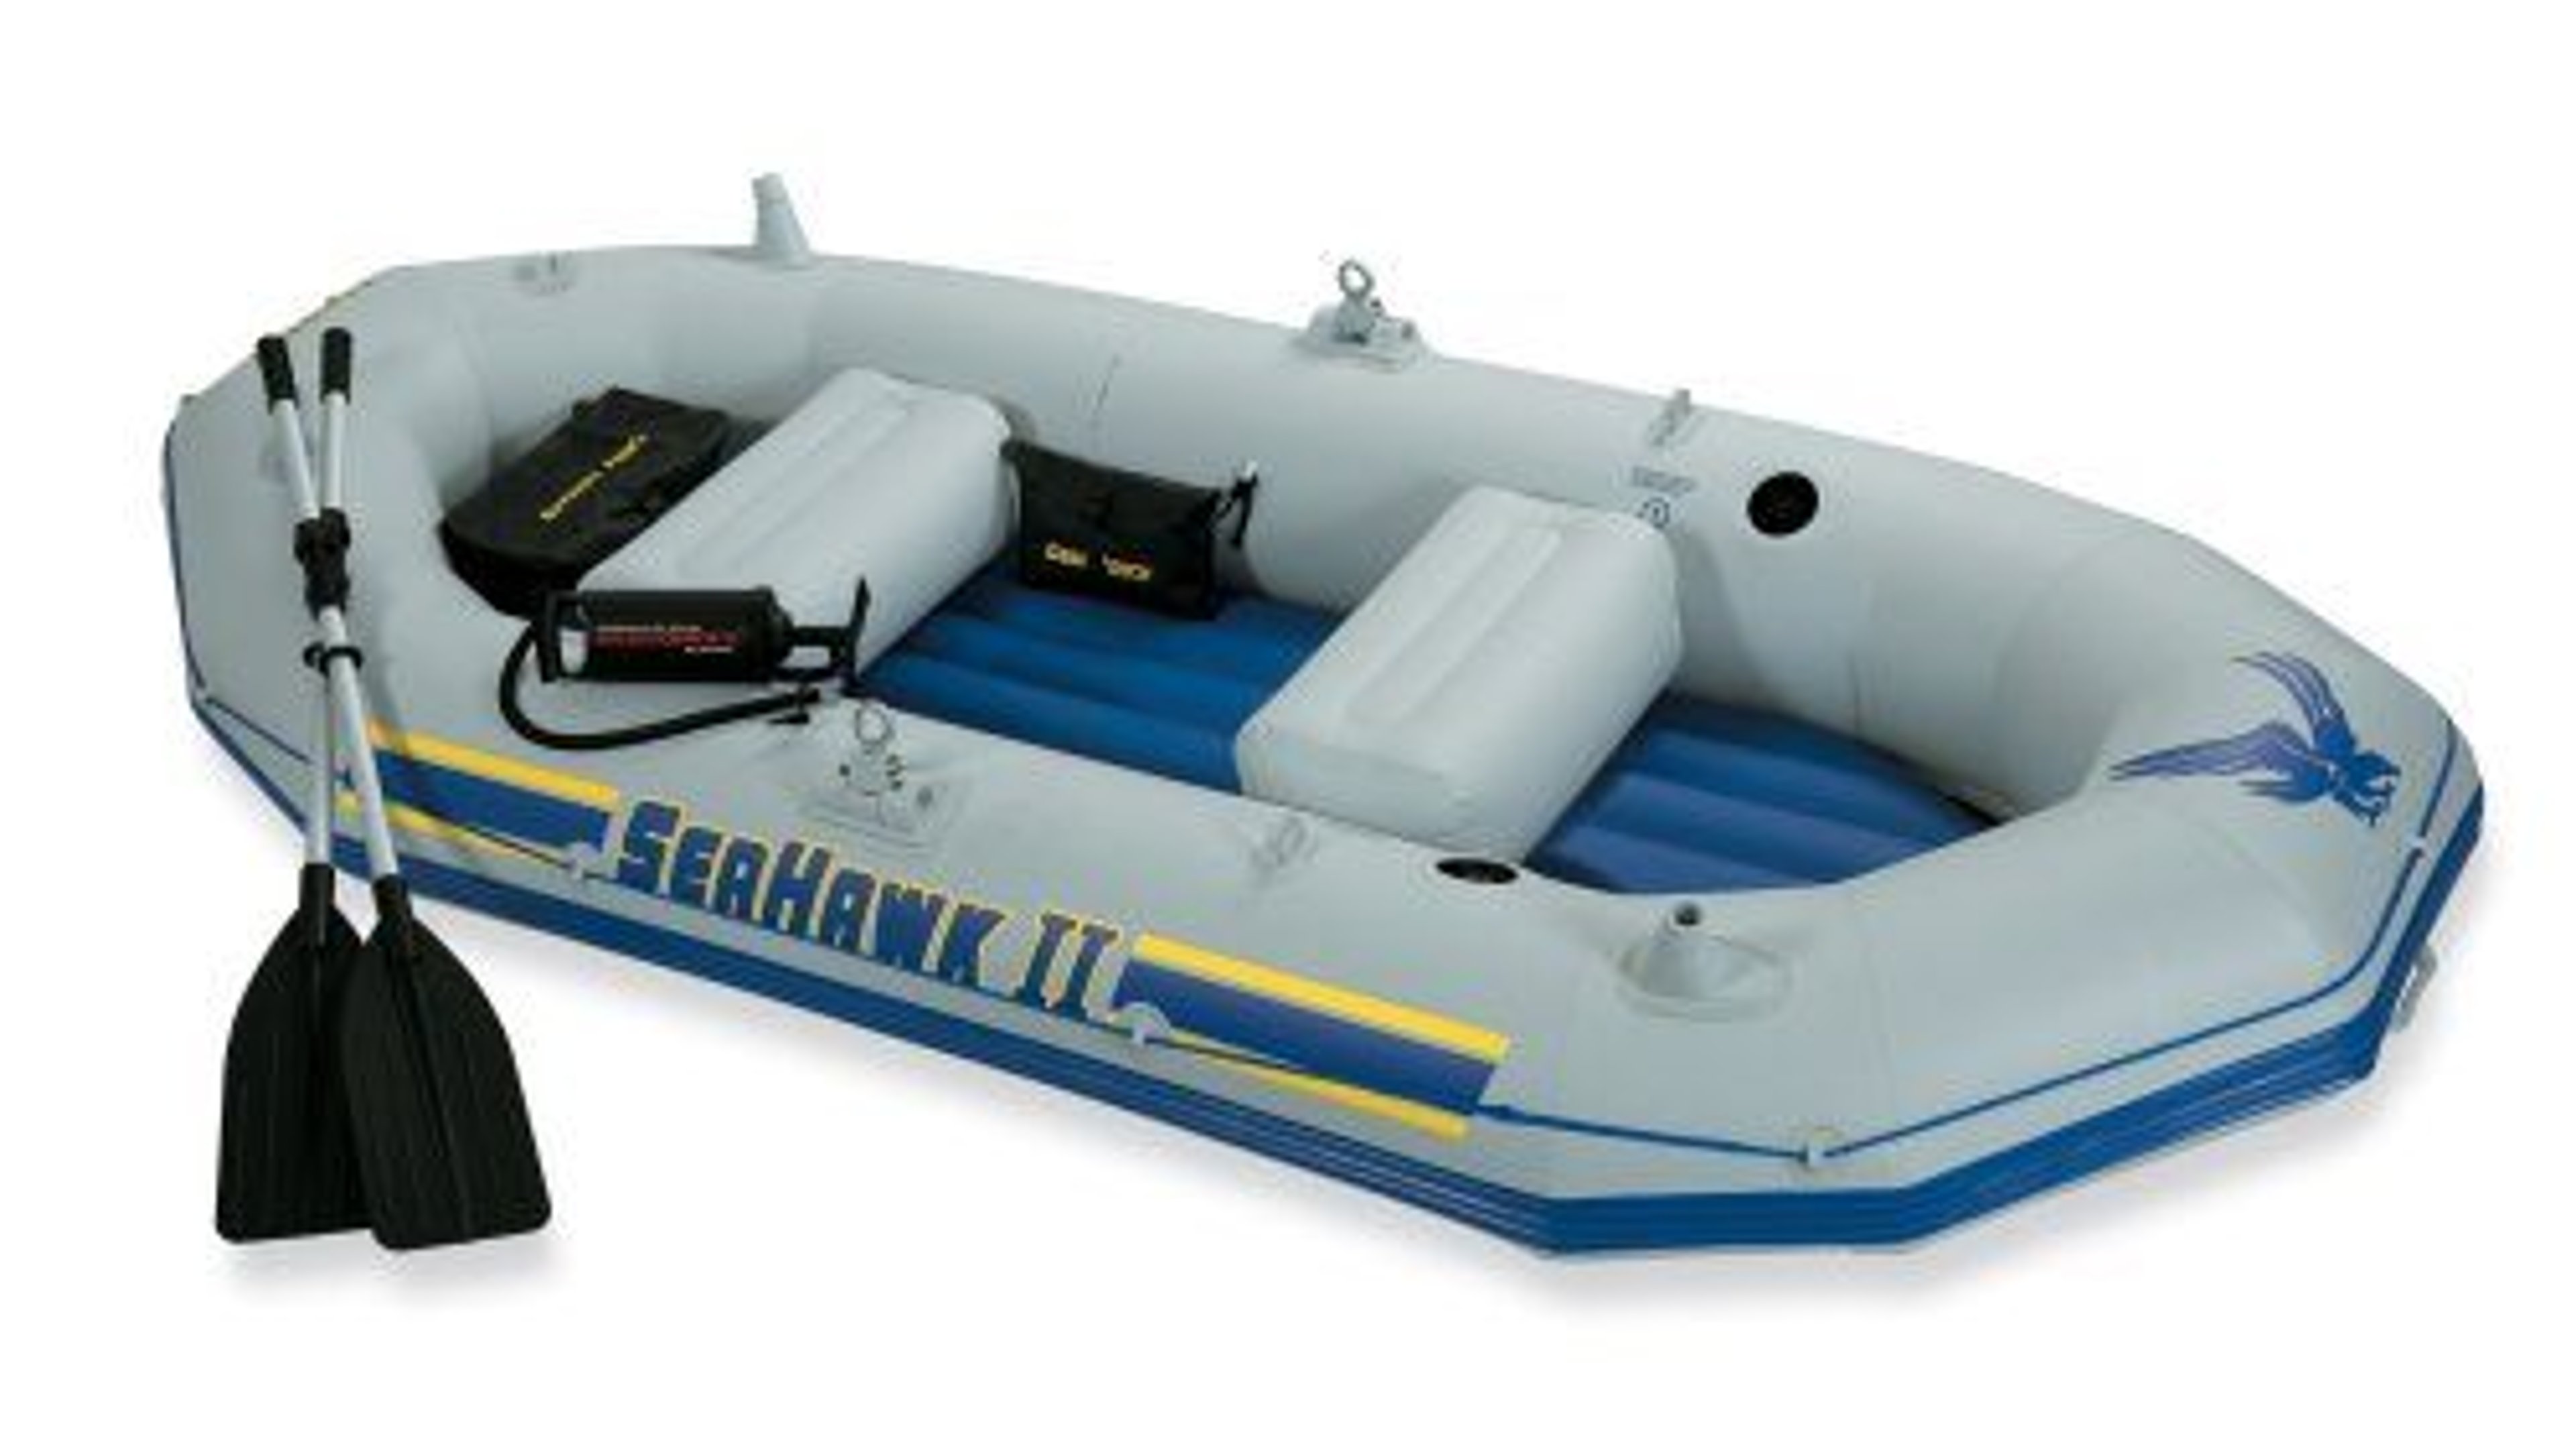 Intex SeaHawk II Inflatable Boat